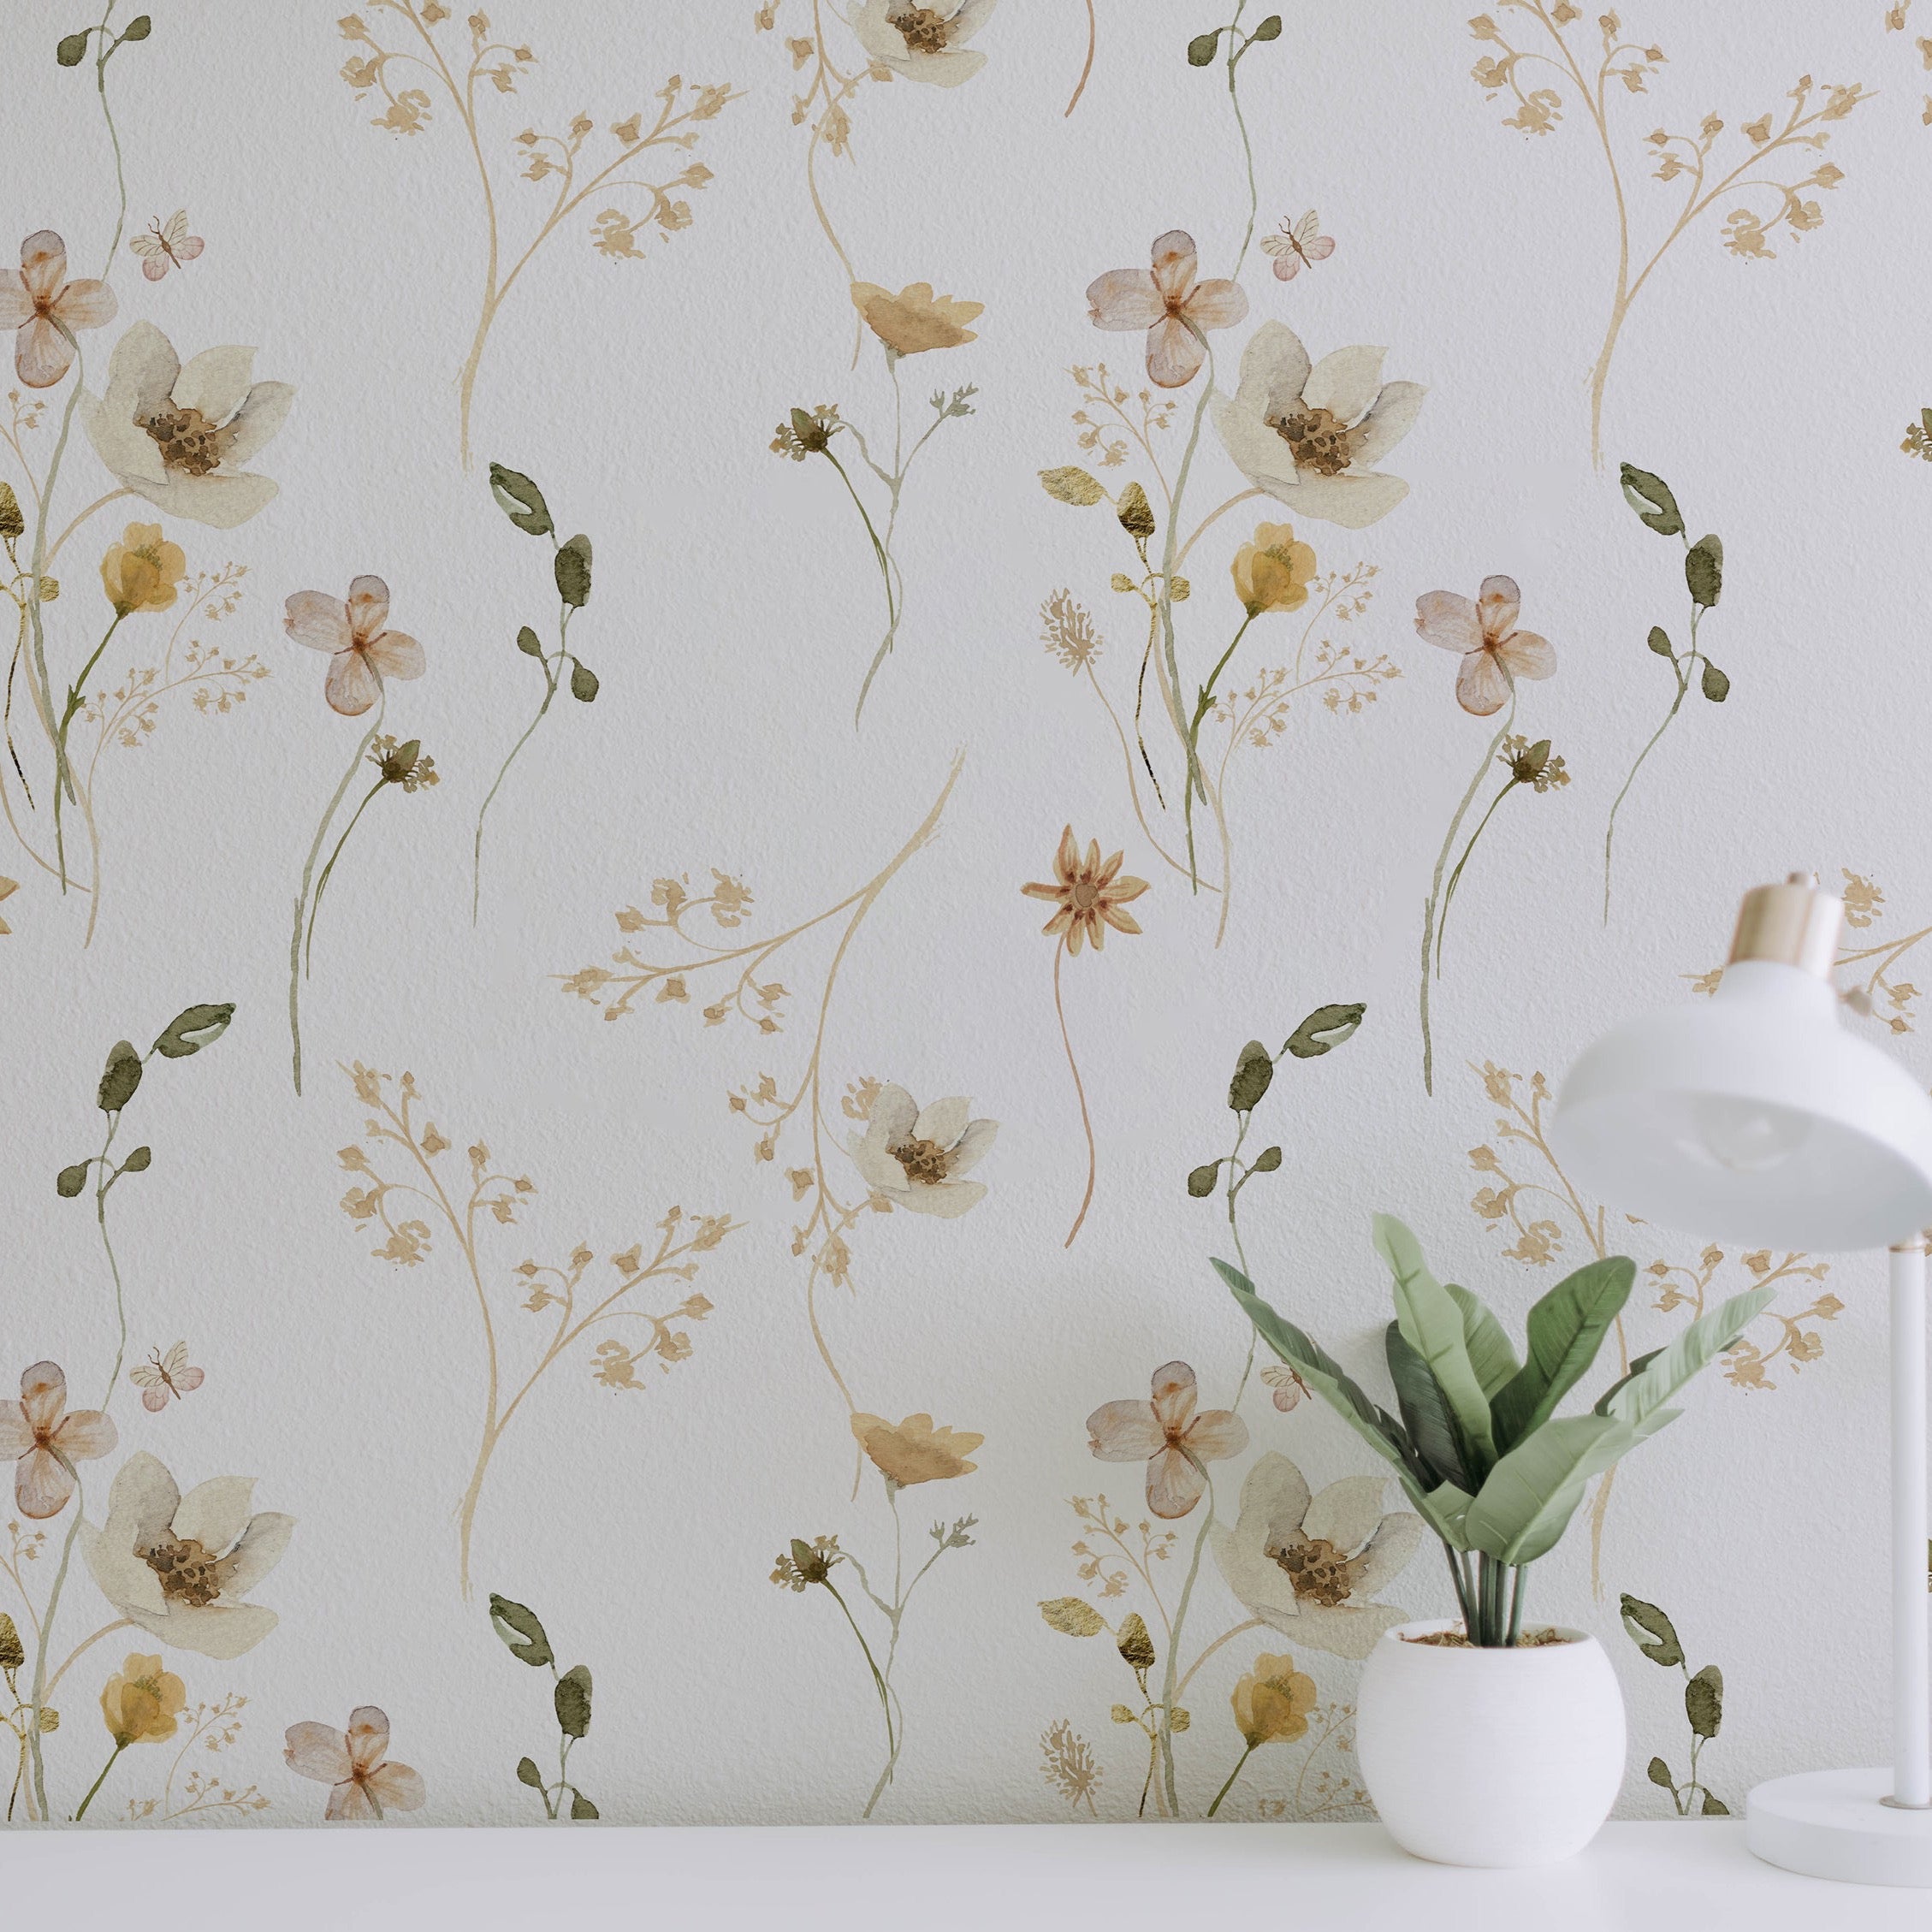 wallpaper, peel and stick wallpaper, Home decor, delicate floral wallpaper, Golden yellow wallpaper, bedroom wallpaper, Floral wallpaper,